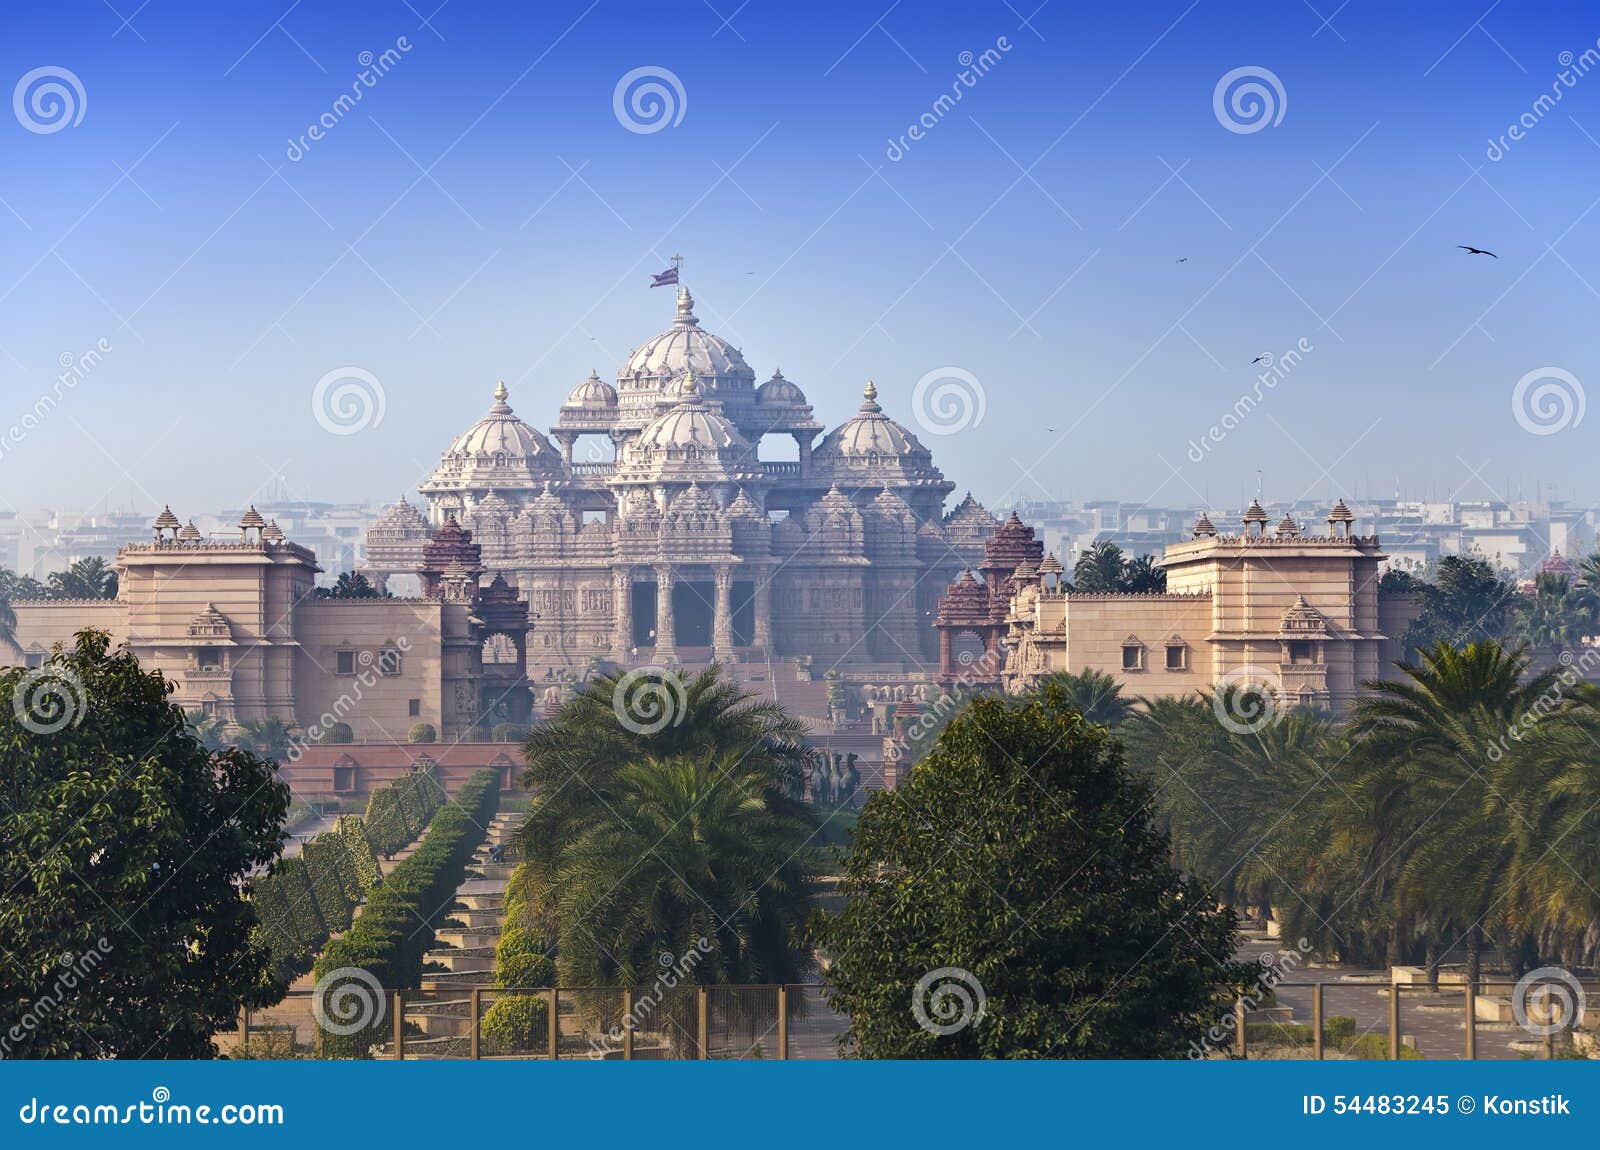 temple akshardham in sunny day, delhi, india